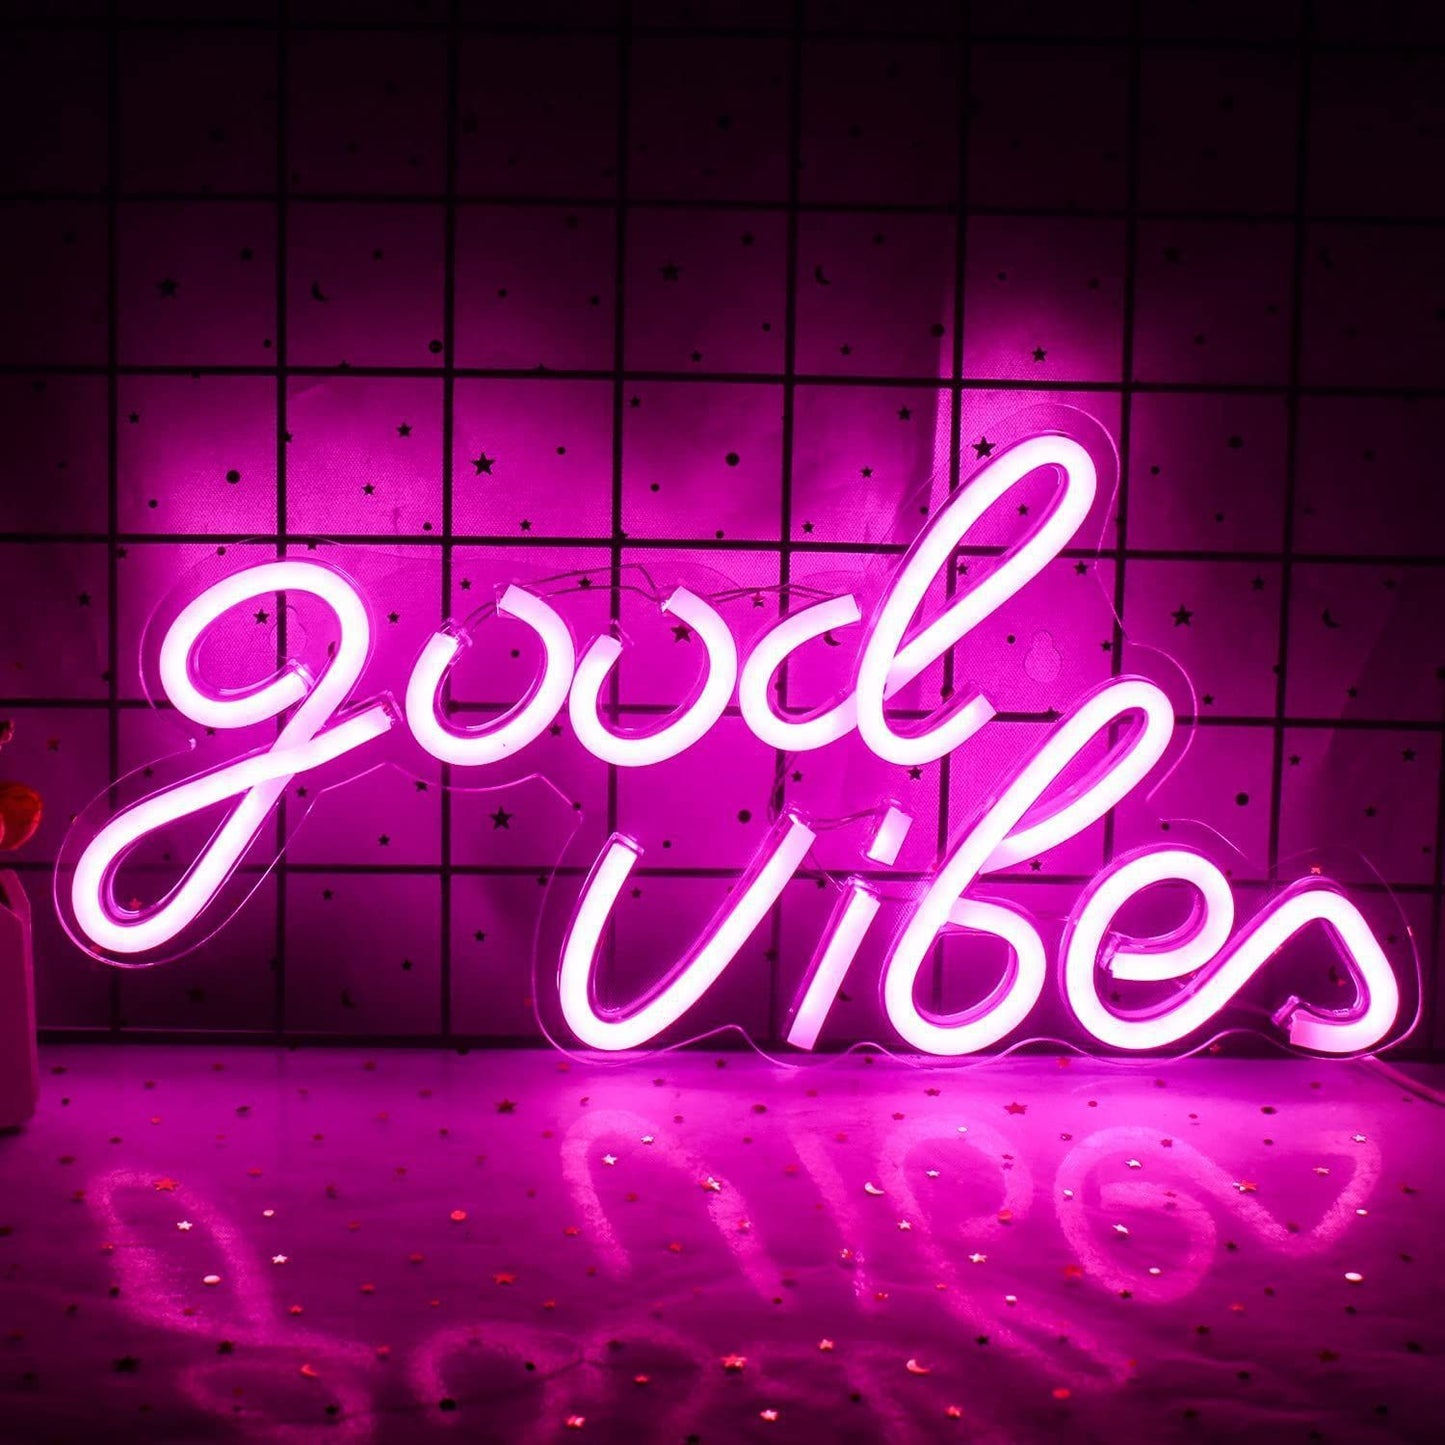 PVC Good Vibes LED English Letters Neon Nightlight